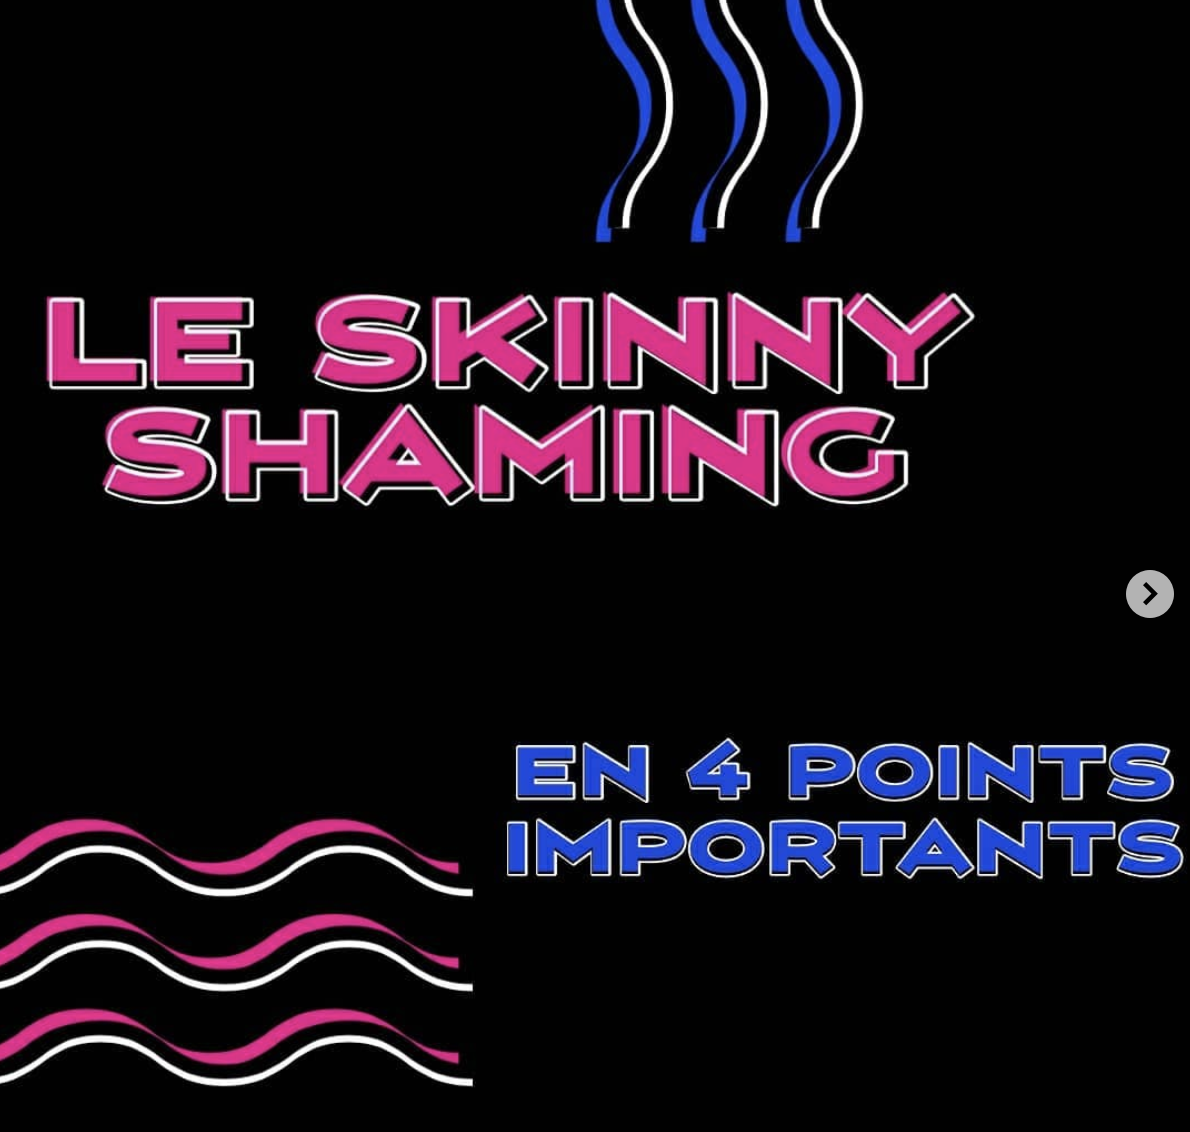 Le skinny shaming